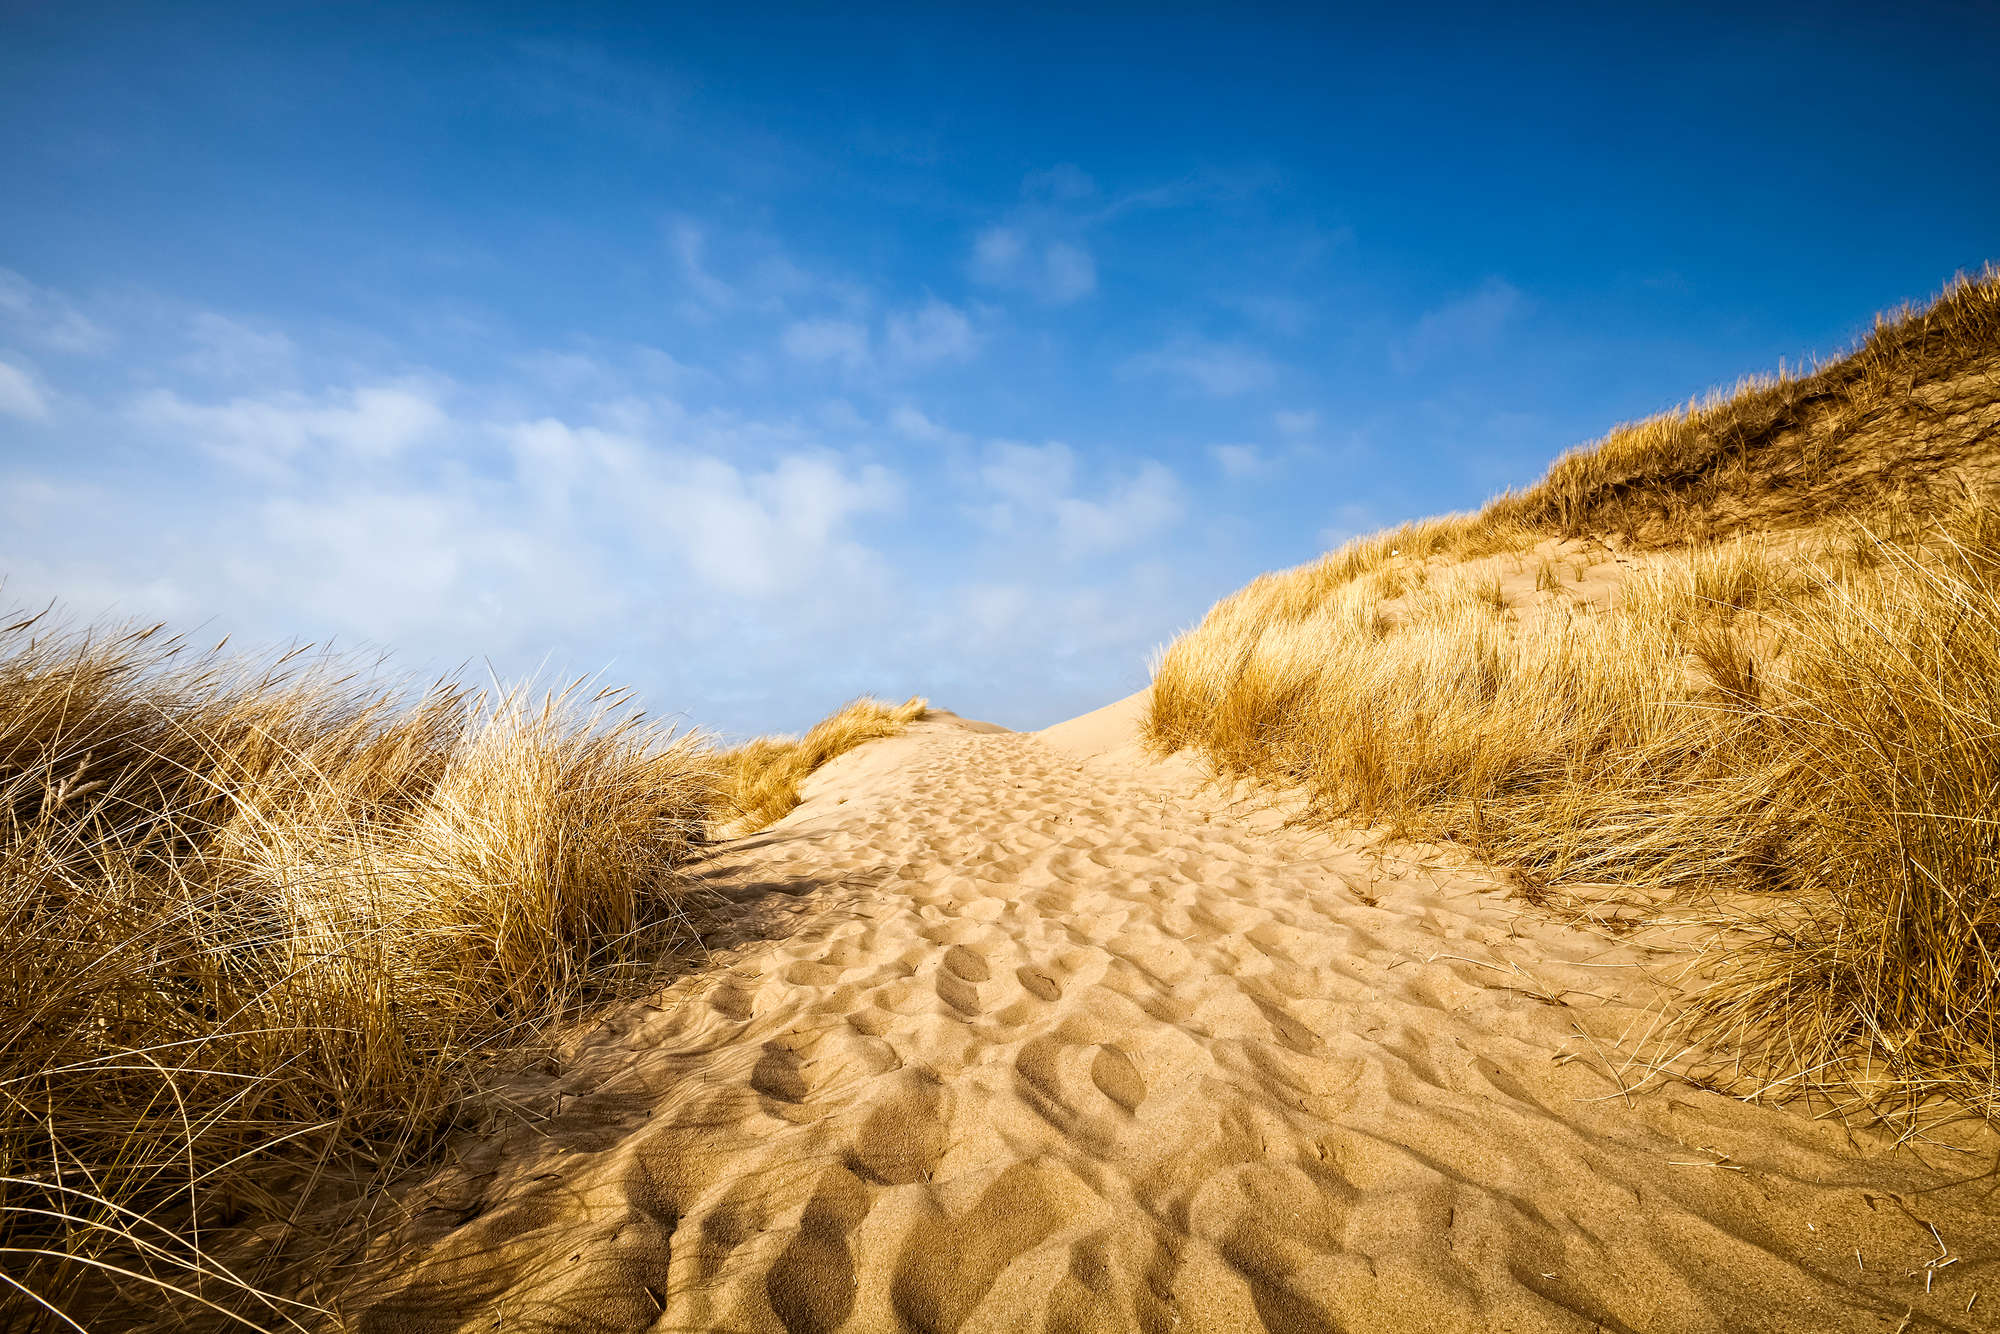             Fotomurali da spiaggia con motivo di dune su tessuto non tessuto liscio opaco
        